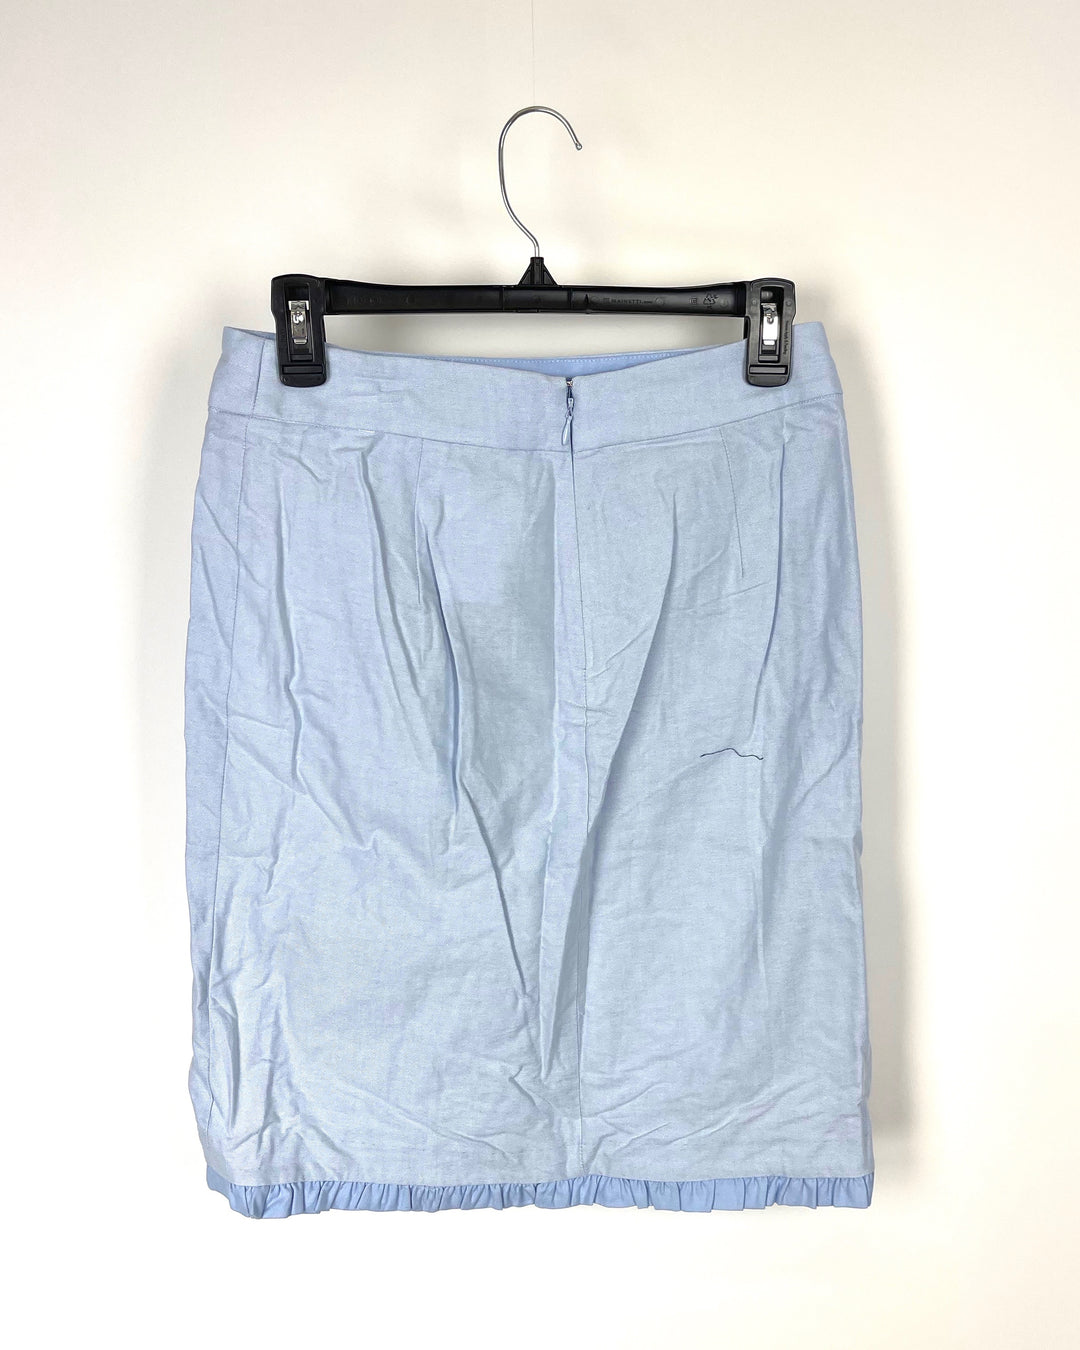 Light Blue Skirt With Ruffles - Size 4